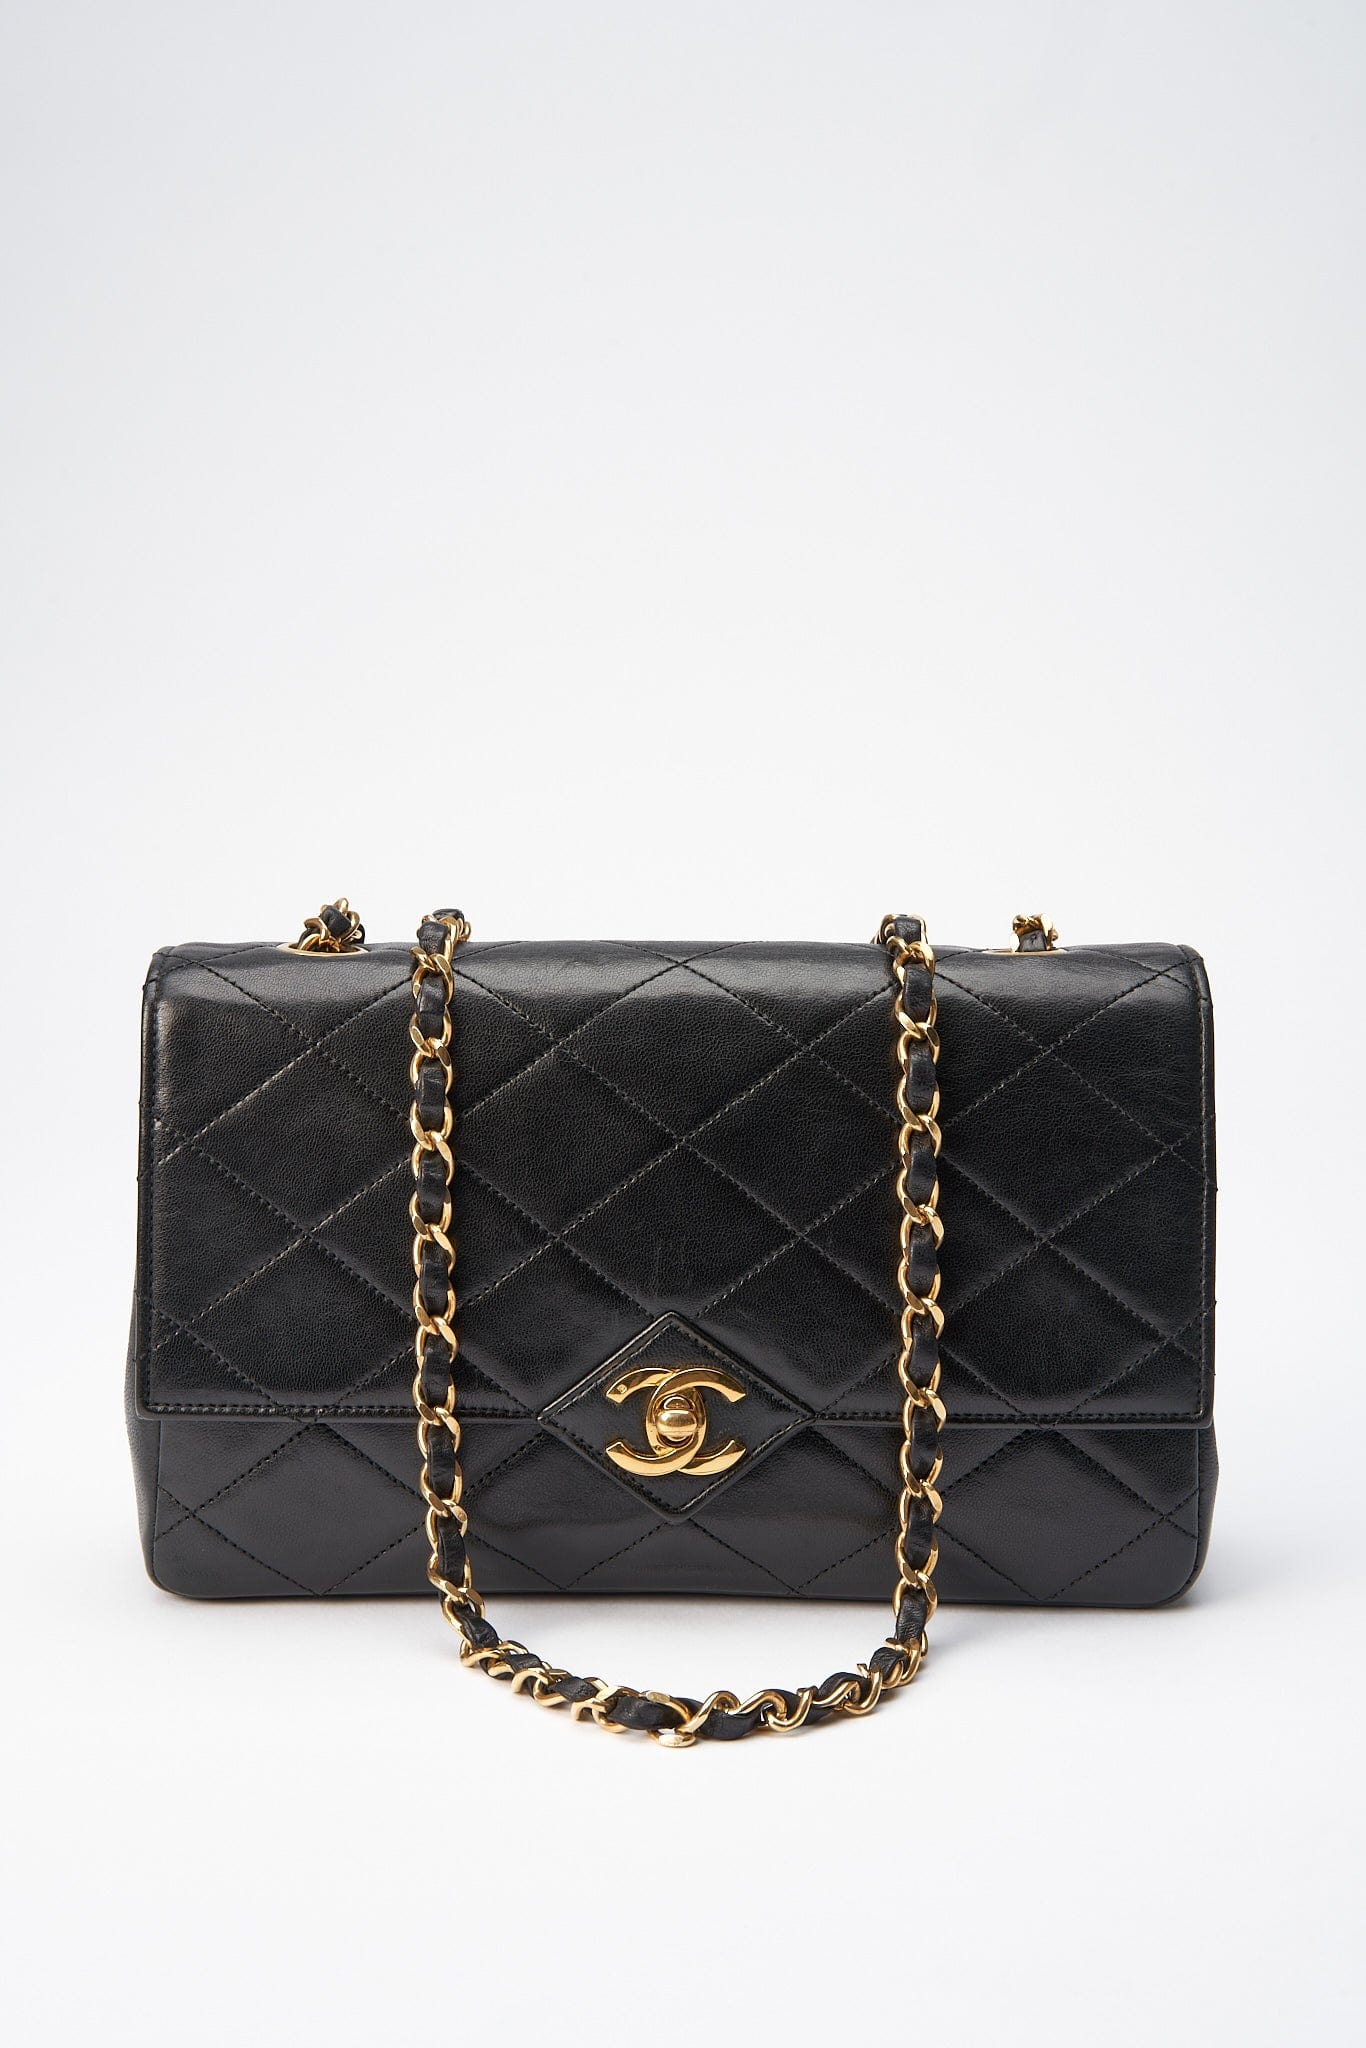 Chanel Vintage Black Single Flap with 24k gold plated hardware and V design